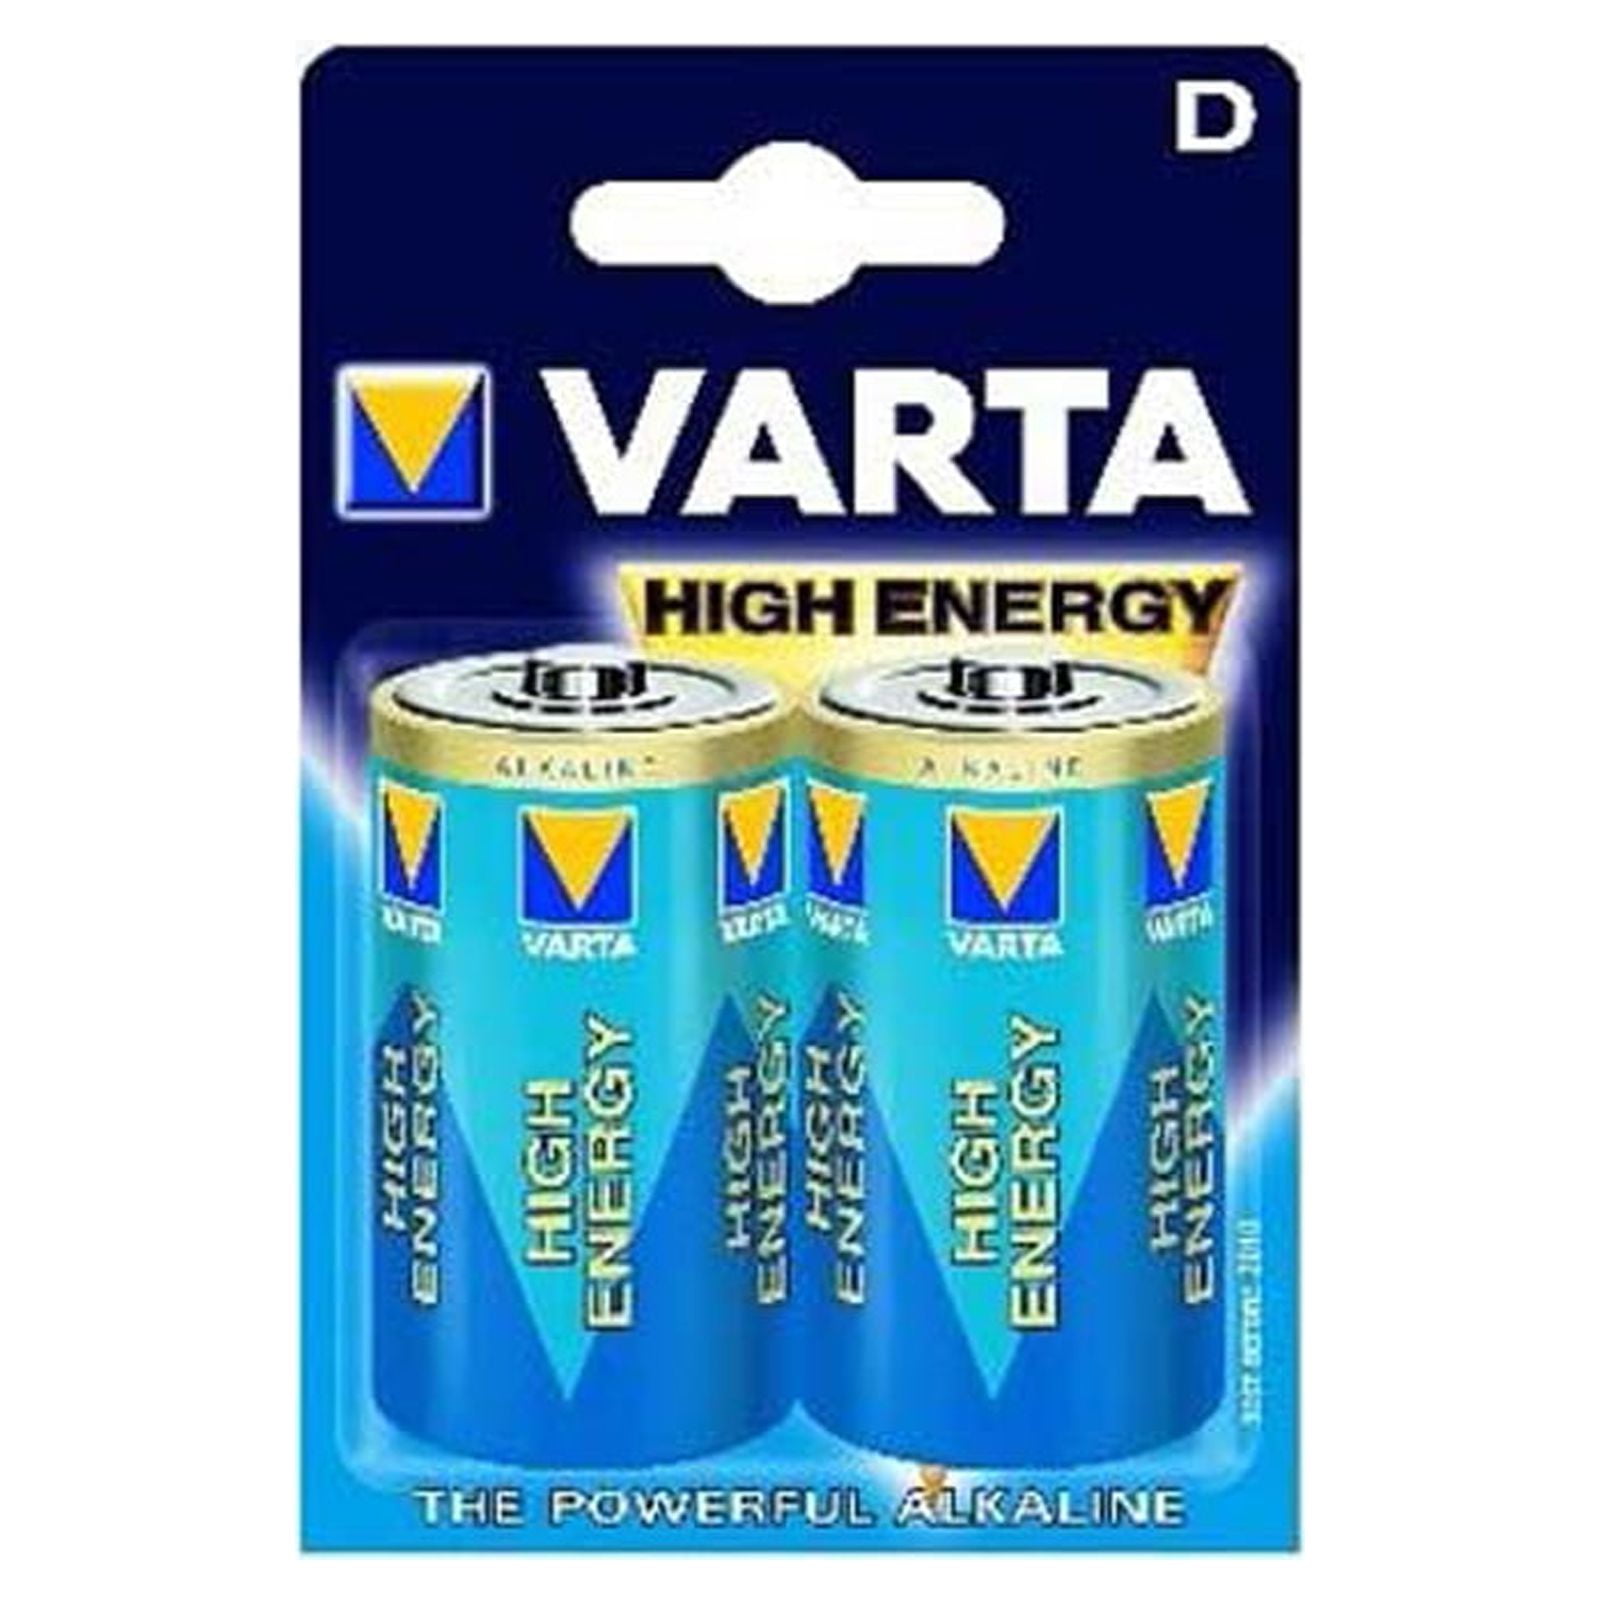 VARTA Batterien D Mono, 2 Stück, Longlife Power, Alkaline, 1,5V, ideal für  Computerzubehör, Taschenlampe, Kamera, Made in Germany: :  Elektronik & Foto